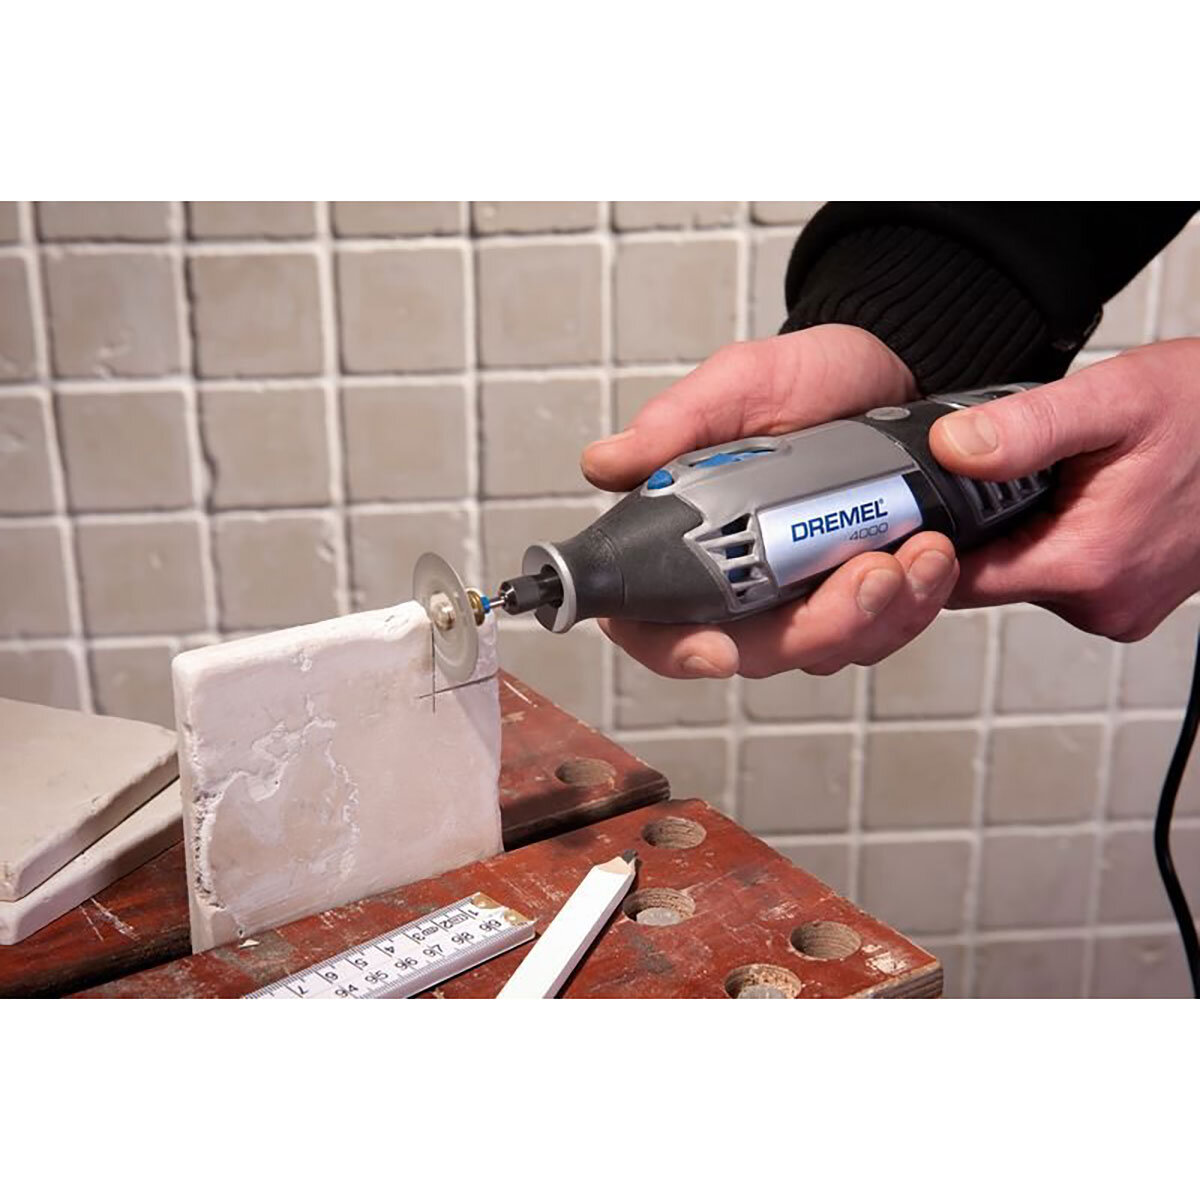 lifestyle image of multi-tool cutting tile